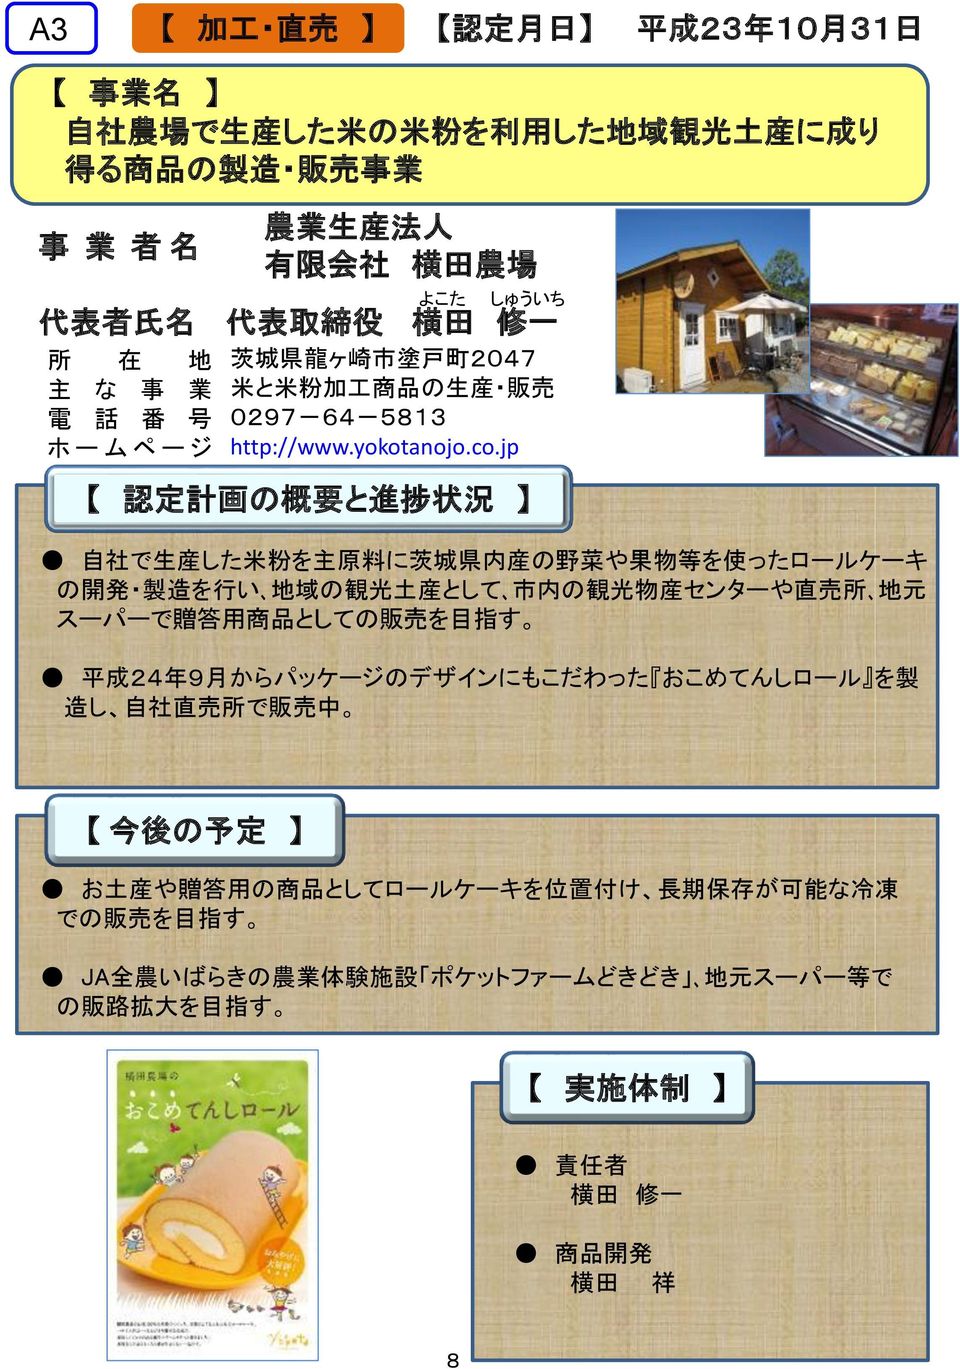 jp 自社で生産した米粉を主原料に茨城県内産の野菜や果物等を使ったロールケーキの開発 製造を行い 地域の観光土産として 市内の観光物産センターや直売所 地元スーパーで贈答用商品としての販売を目指す 平成 24 年 9